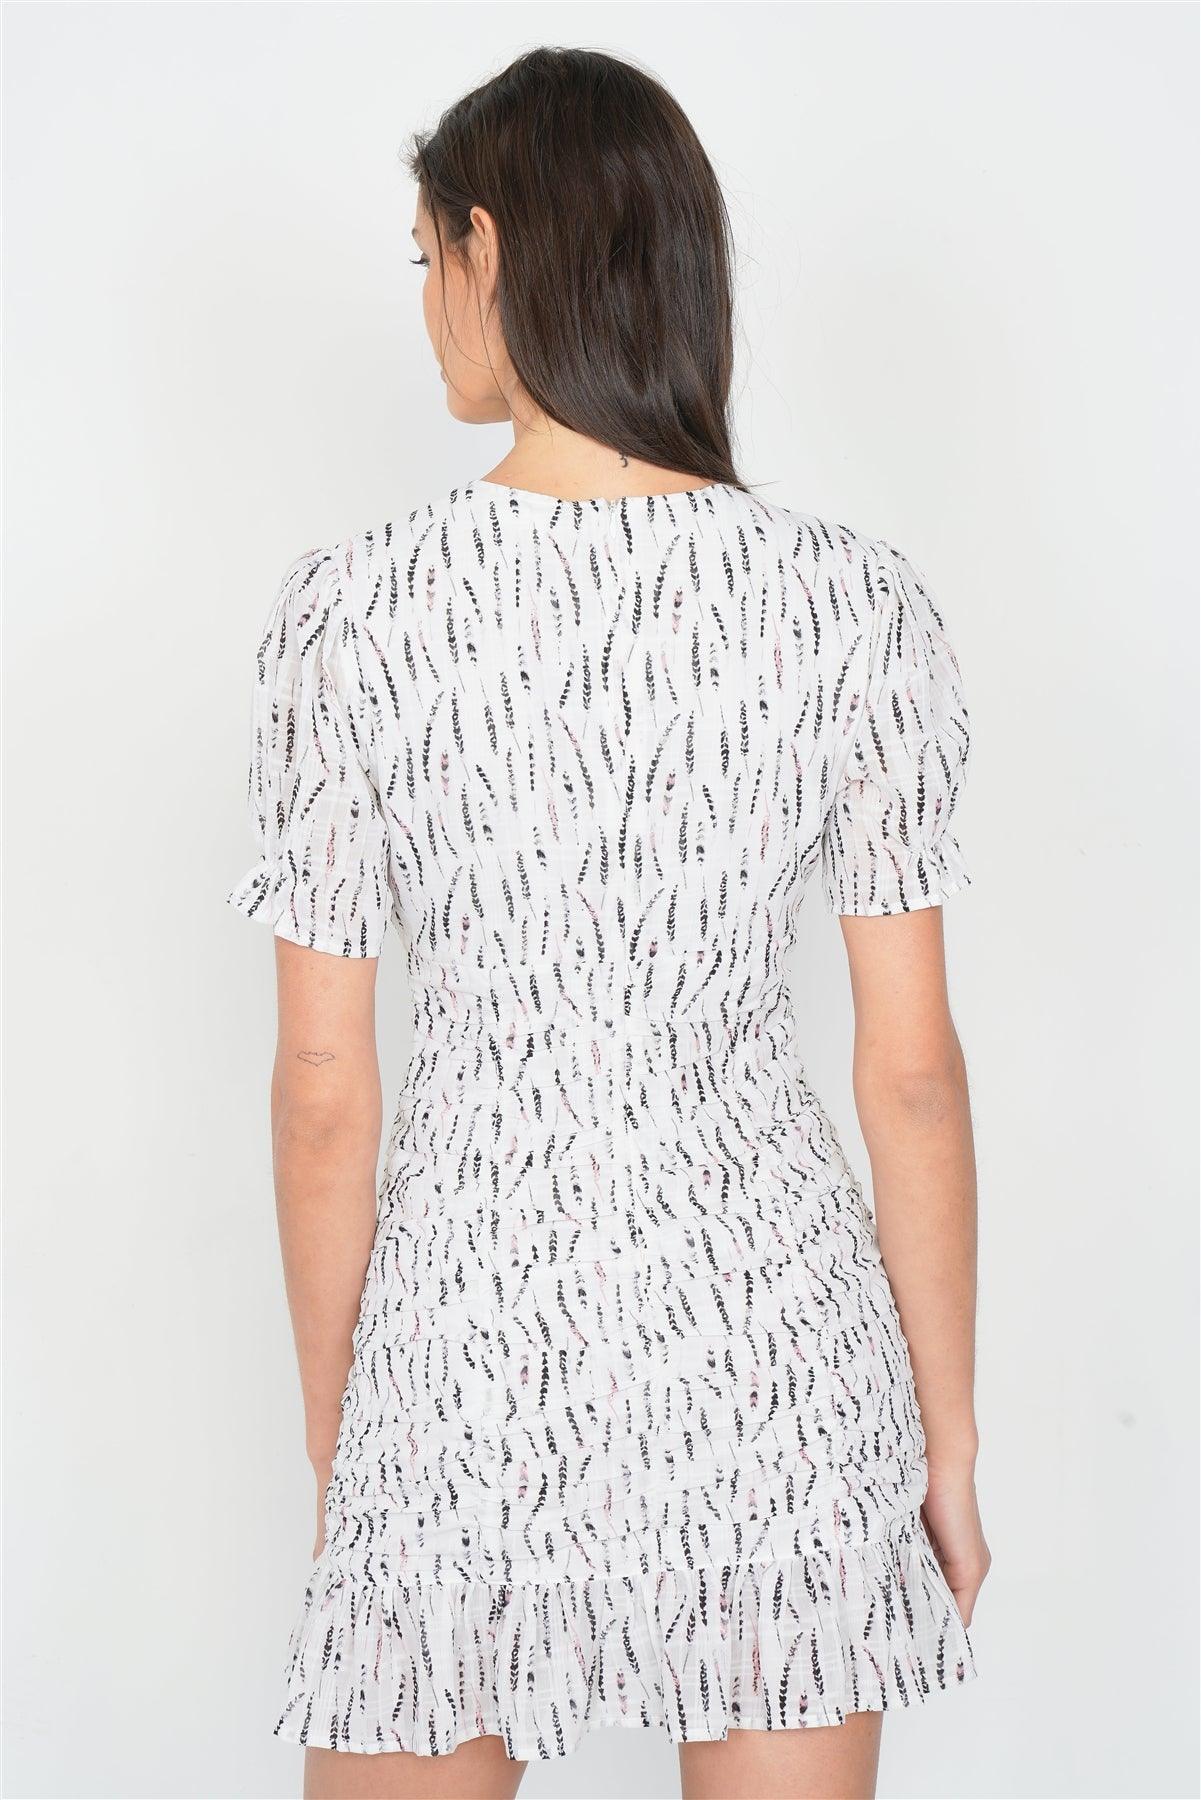 Off-White Boho Print Mini Flounce Trim Hem Cap Sleeve Chiffon Dress /4-2-1